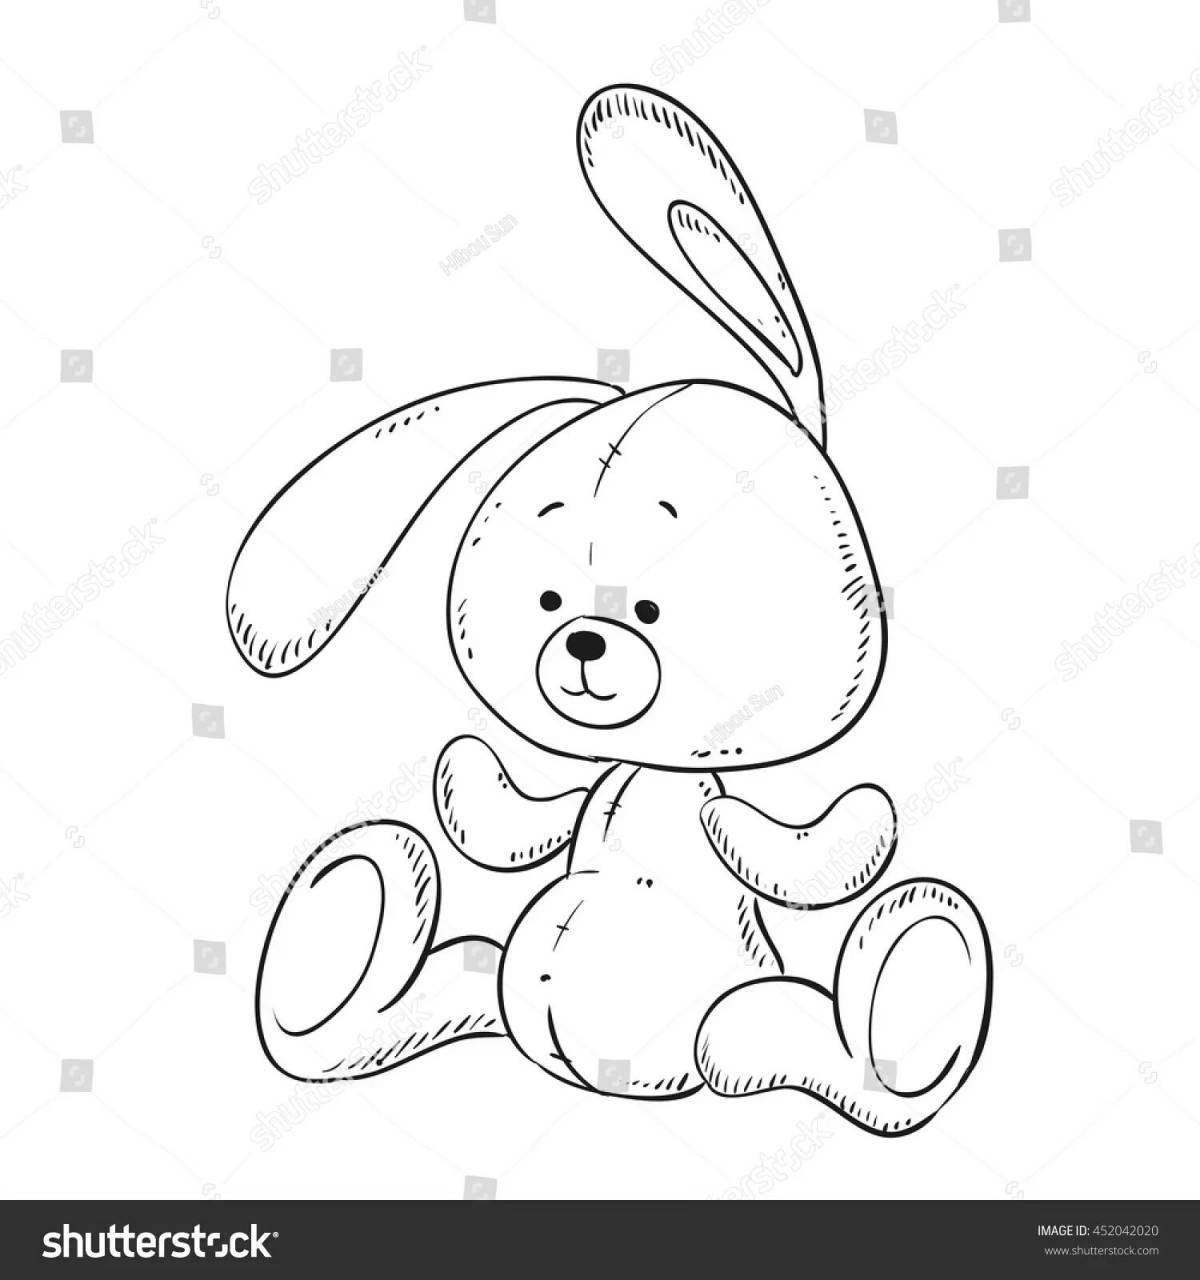 Plush bunny doll coloring